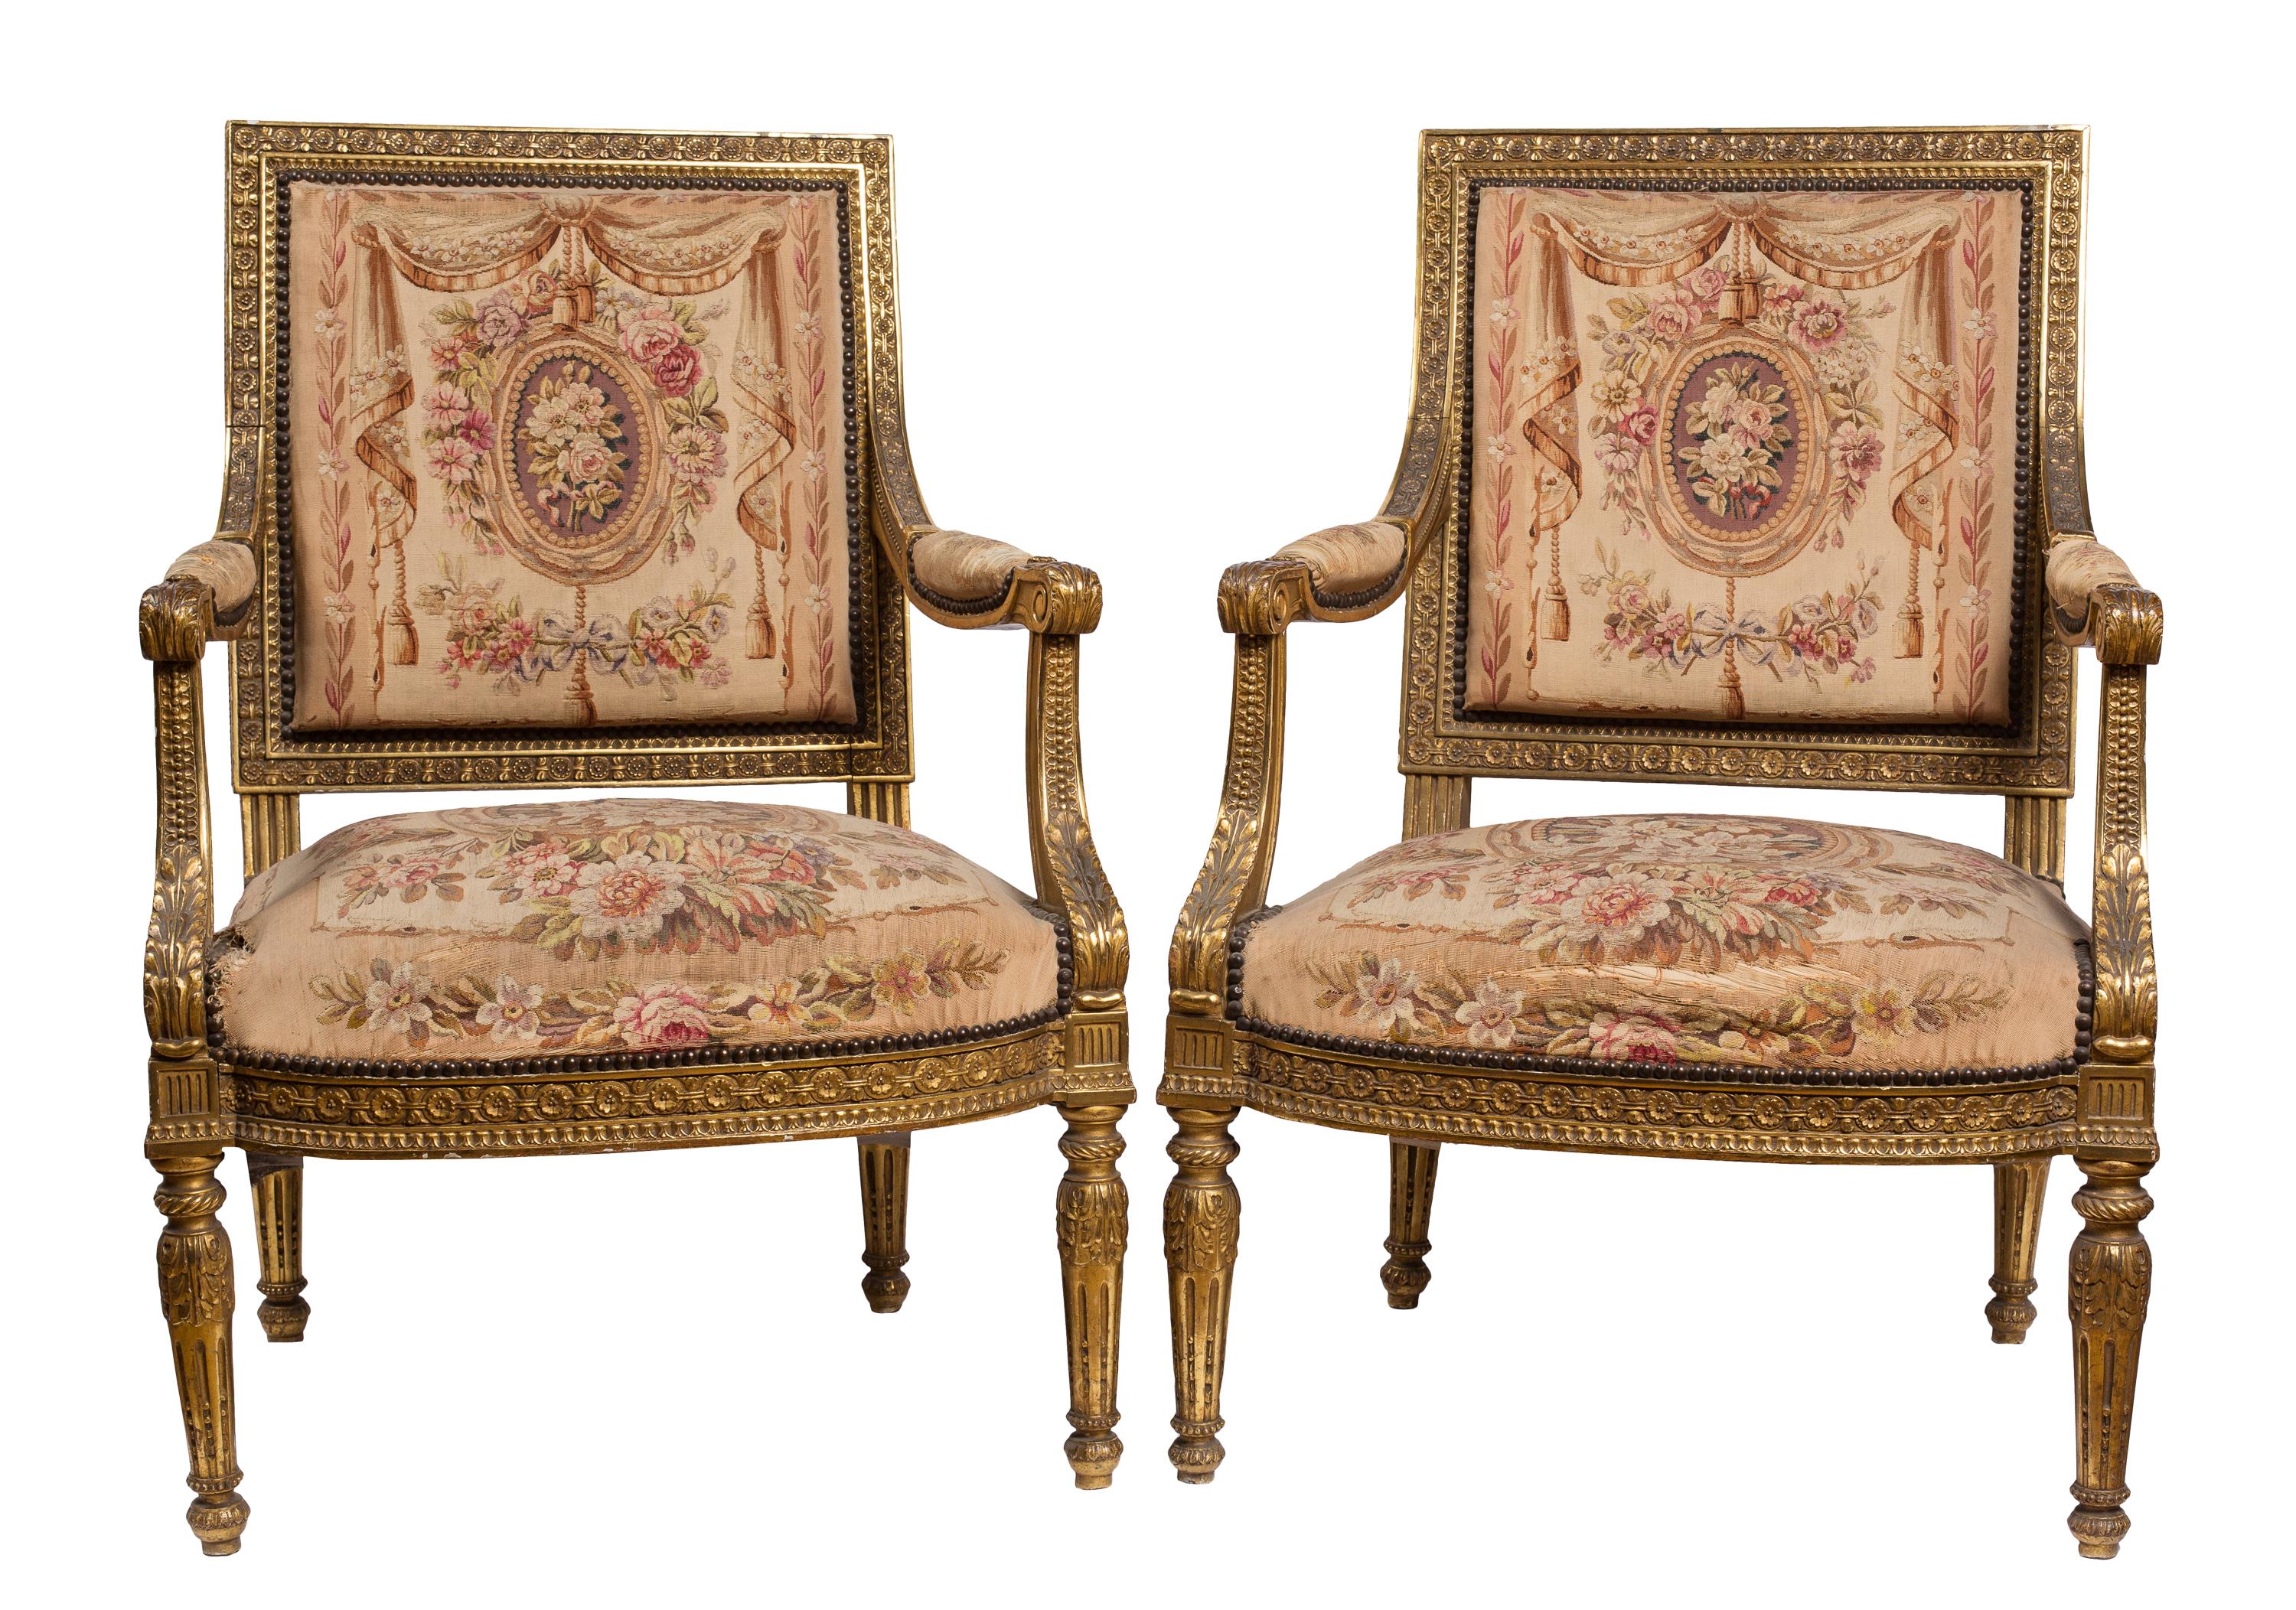 19th Century Antique Louis XVI Style 5 Piece Salon Suite, Sofa, 4 Chairs, Aubusson Upholstery For Sale